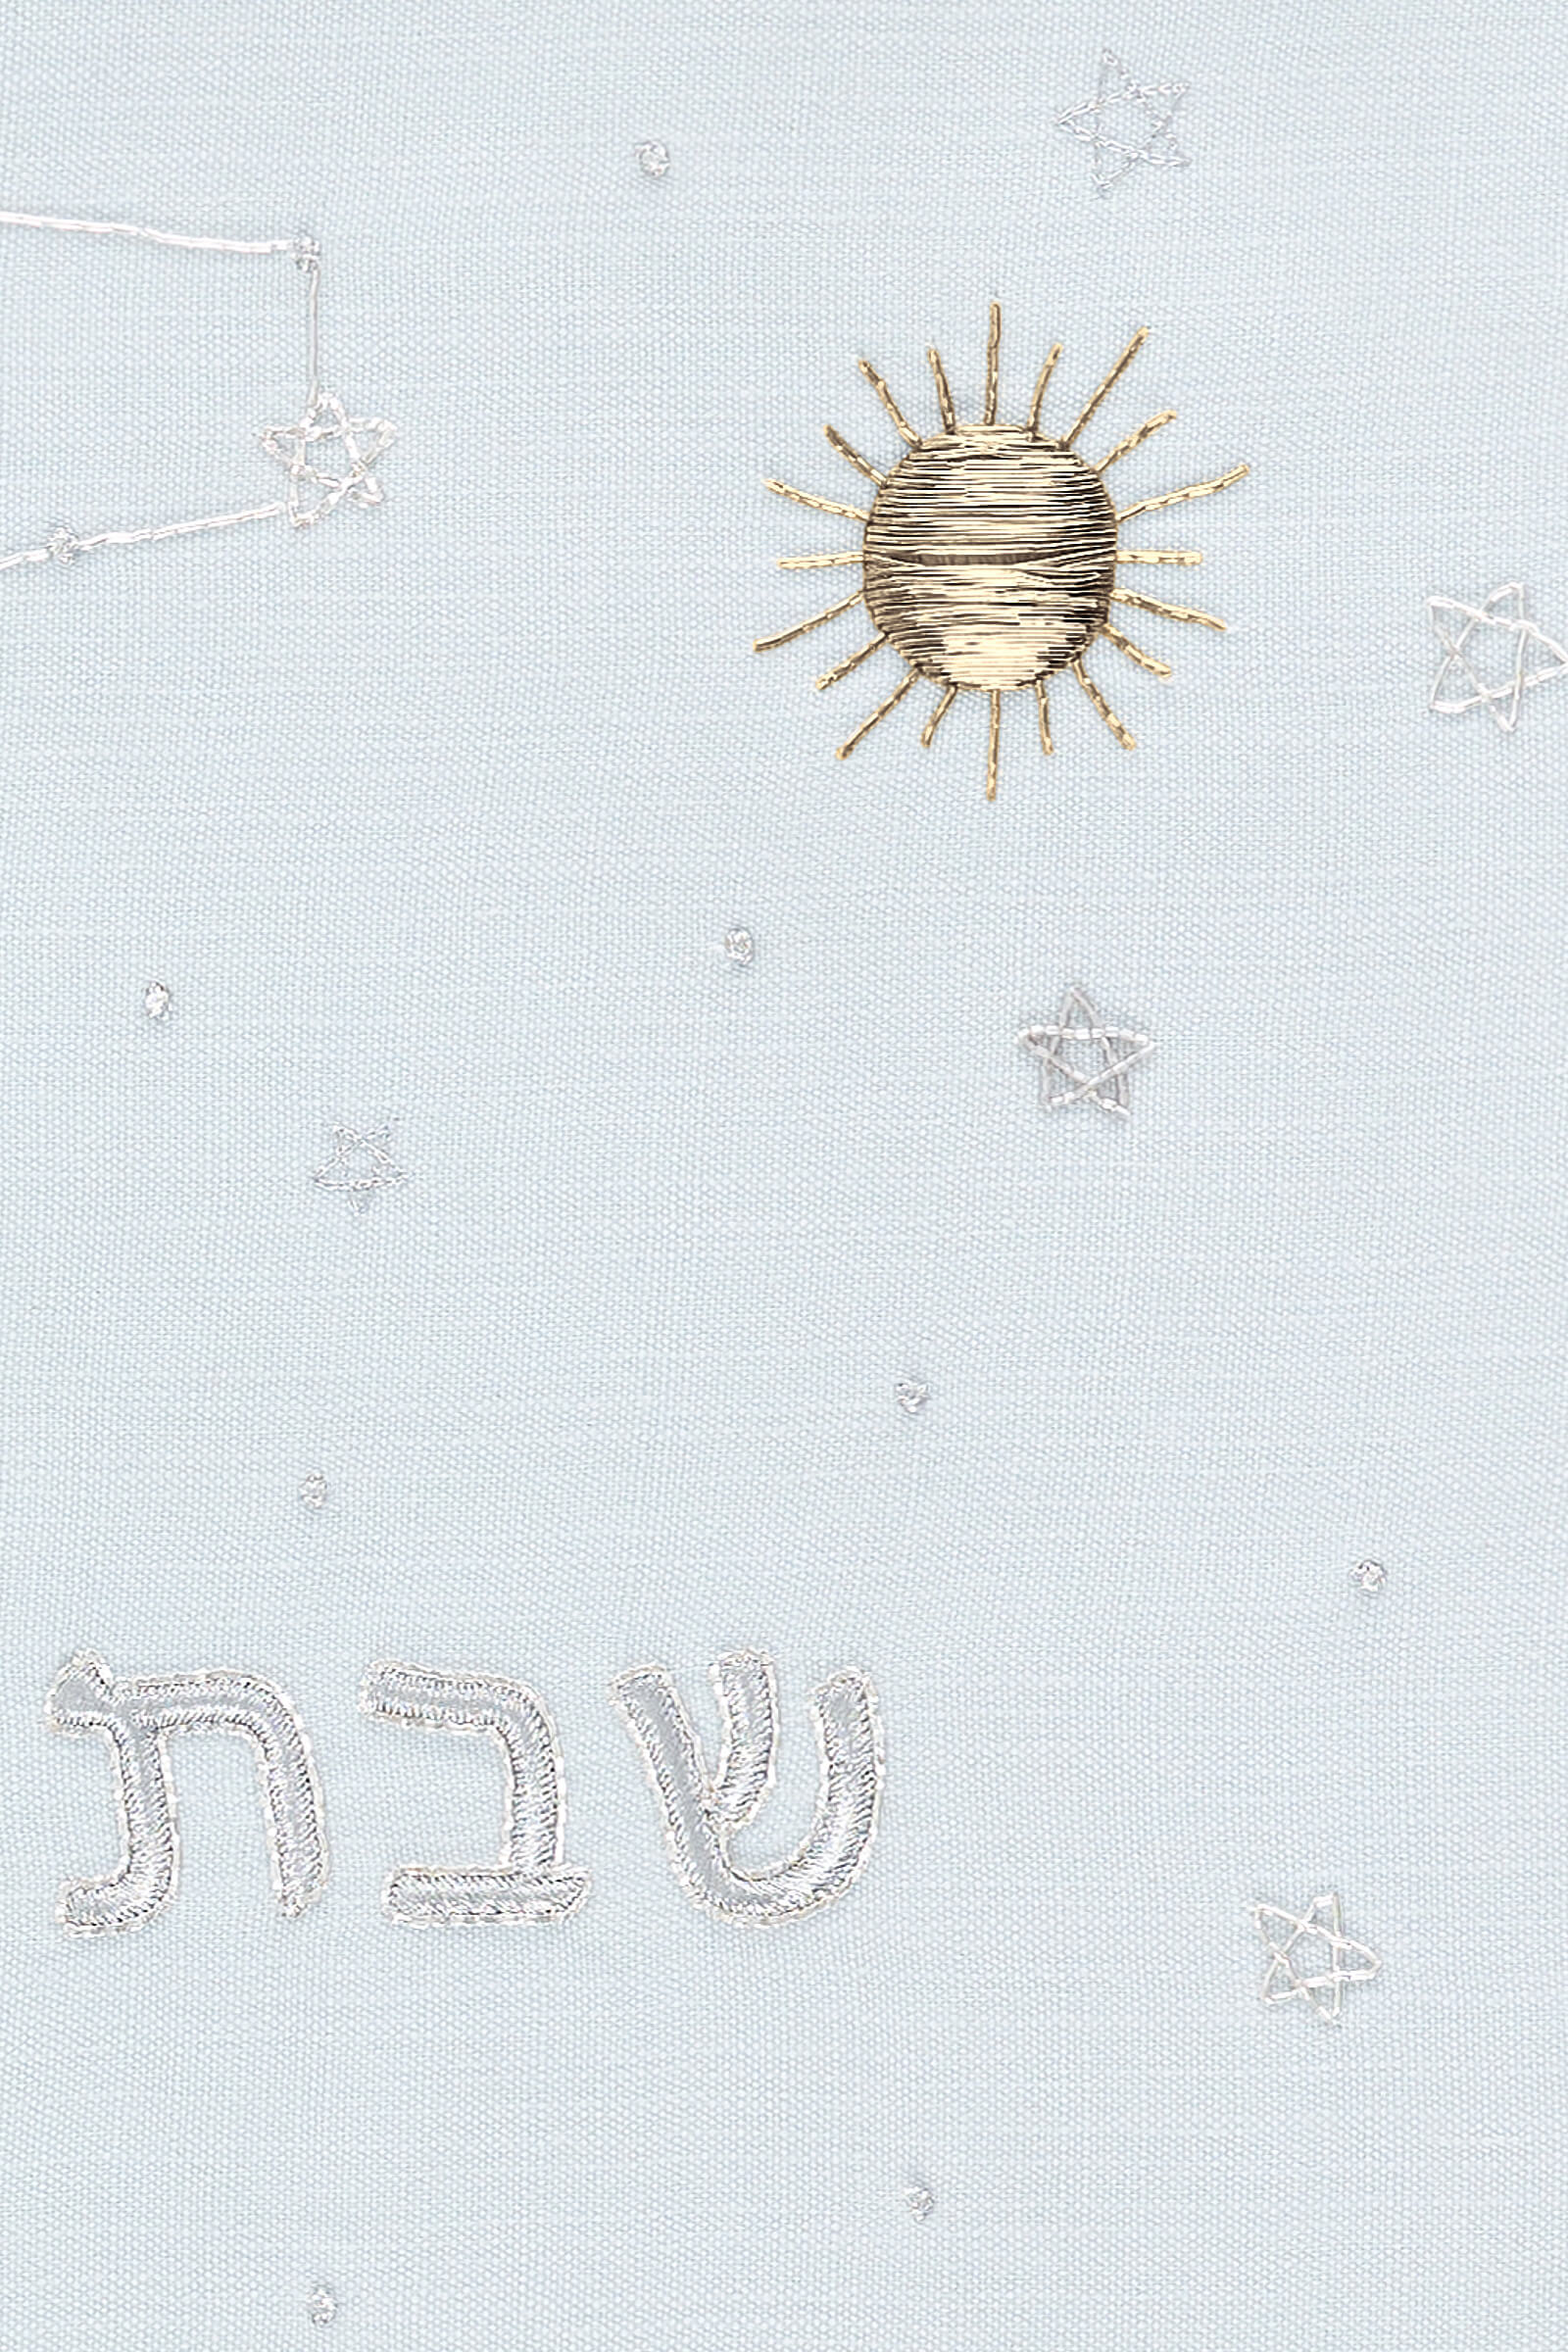 Issachar Challah Cover, Zodiac Day